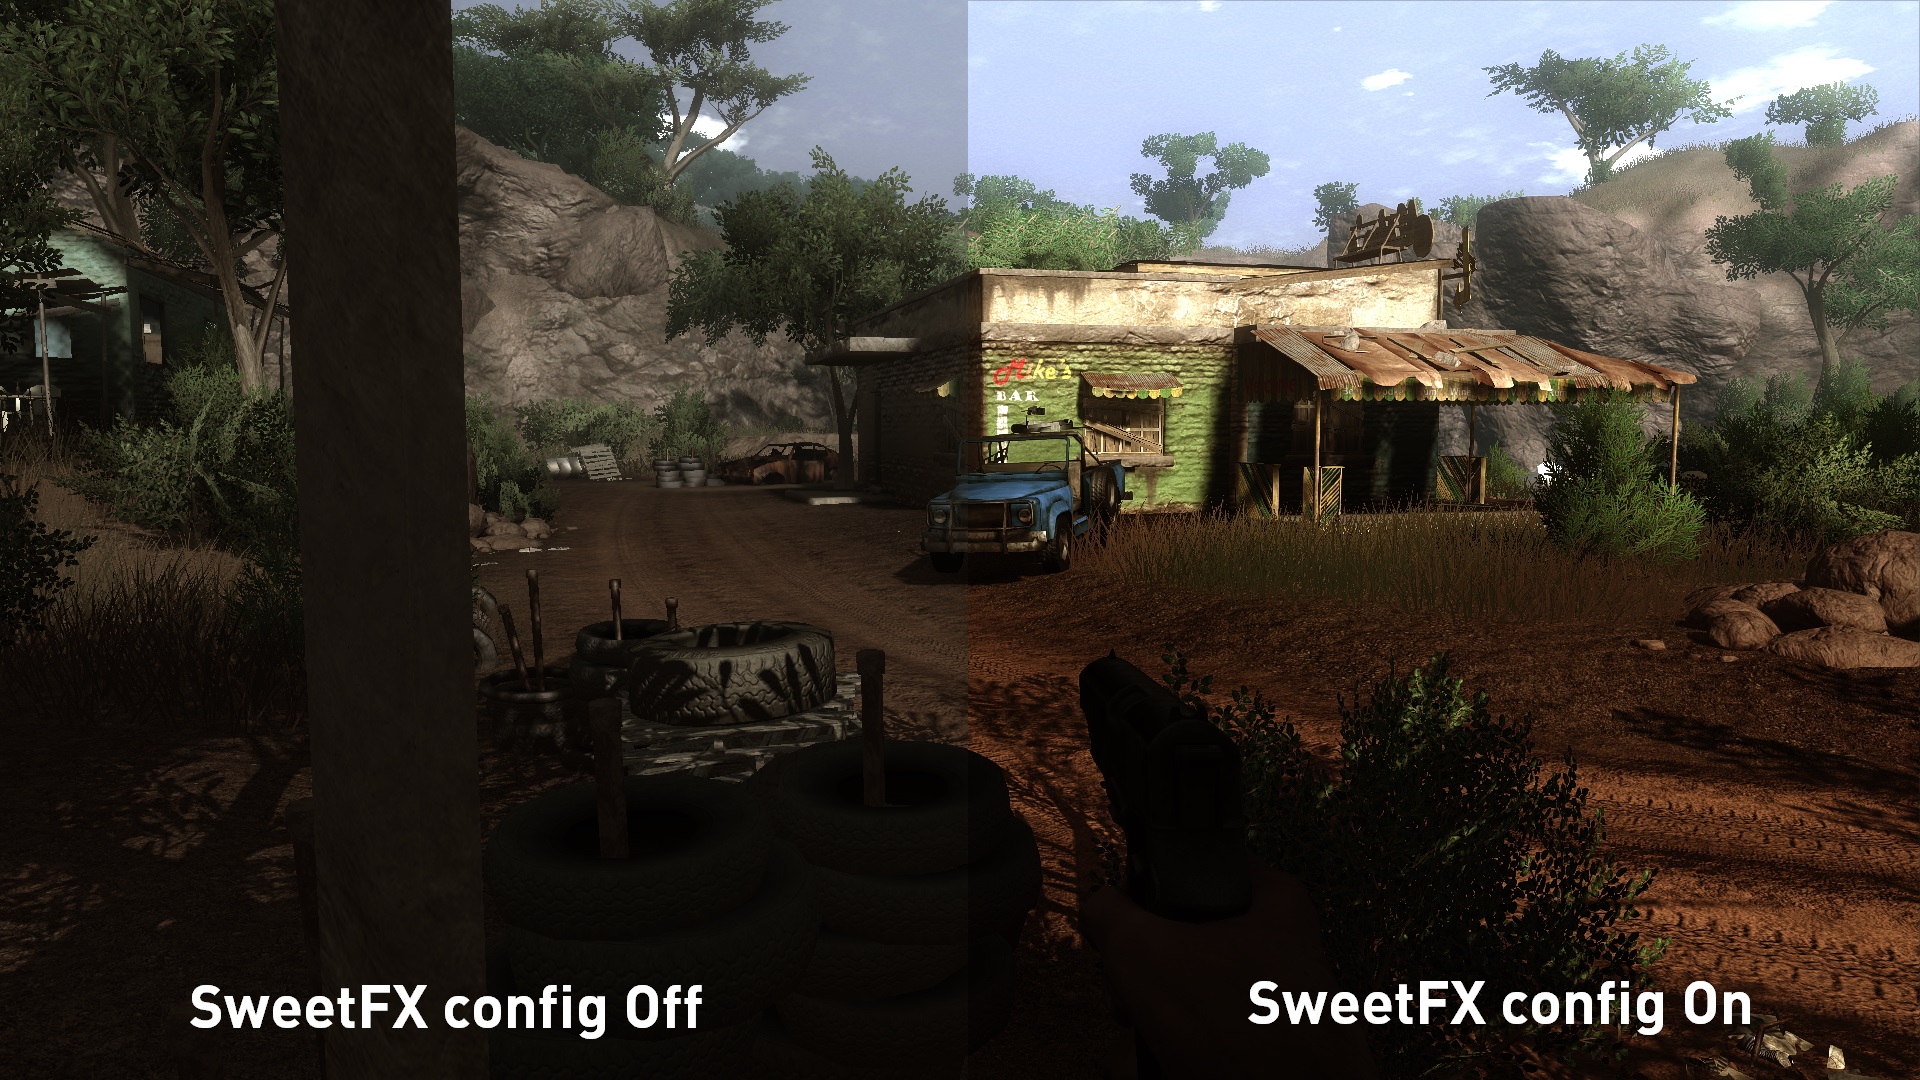 Far Cry 2 Rewards Mod 1.01 Direct Download version file - Mod DB